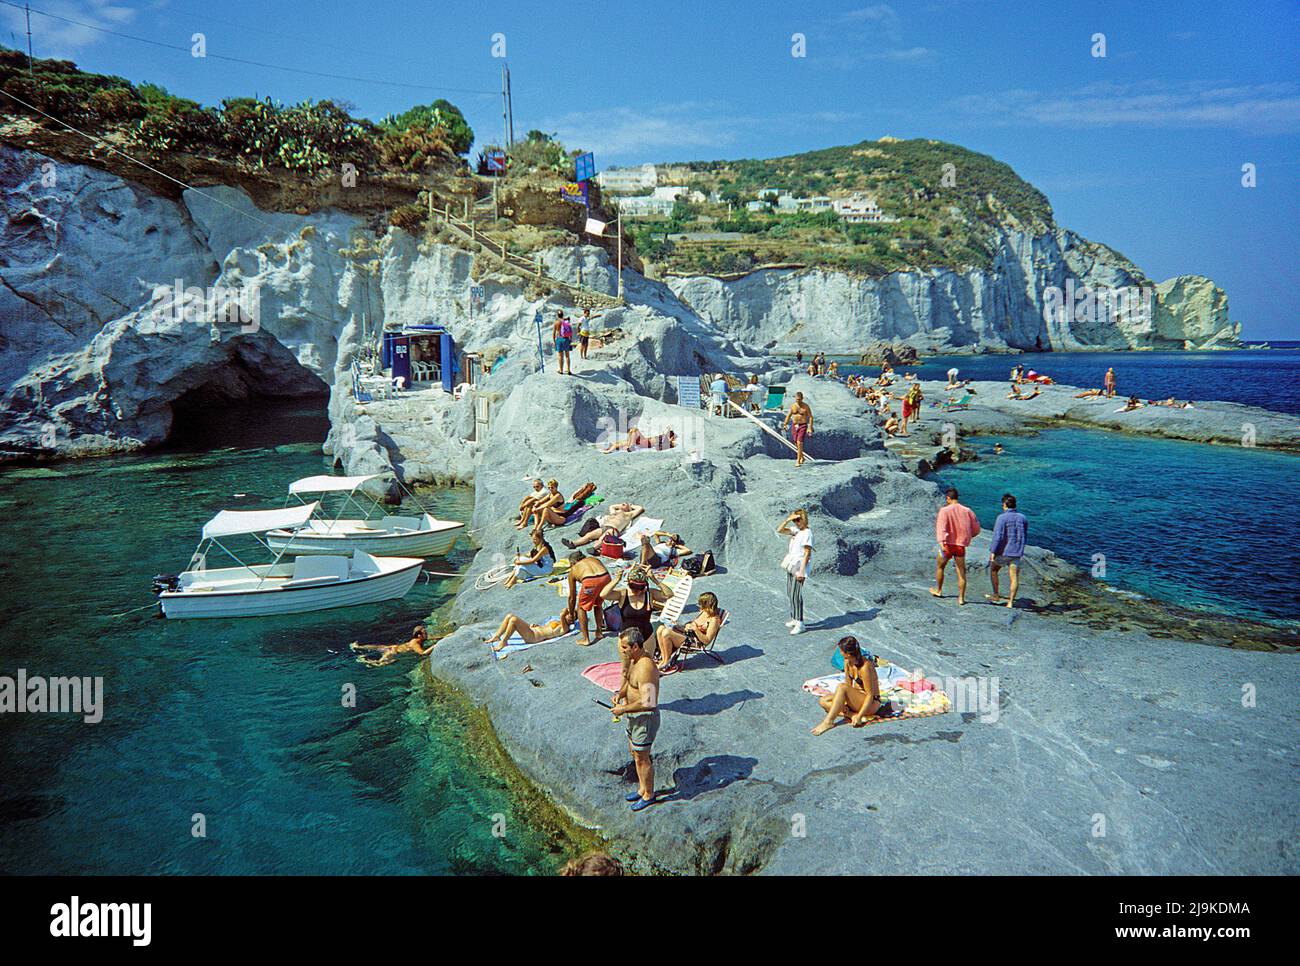 People at a natural pool, bathing beach at Le Forna, Ponza, Island, South Italy, Italy, Tyrrhenian Sea, Mediterranean Sea, Europe Stock Photo